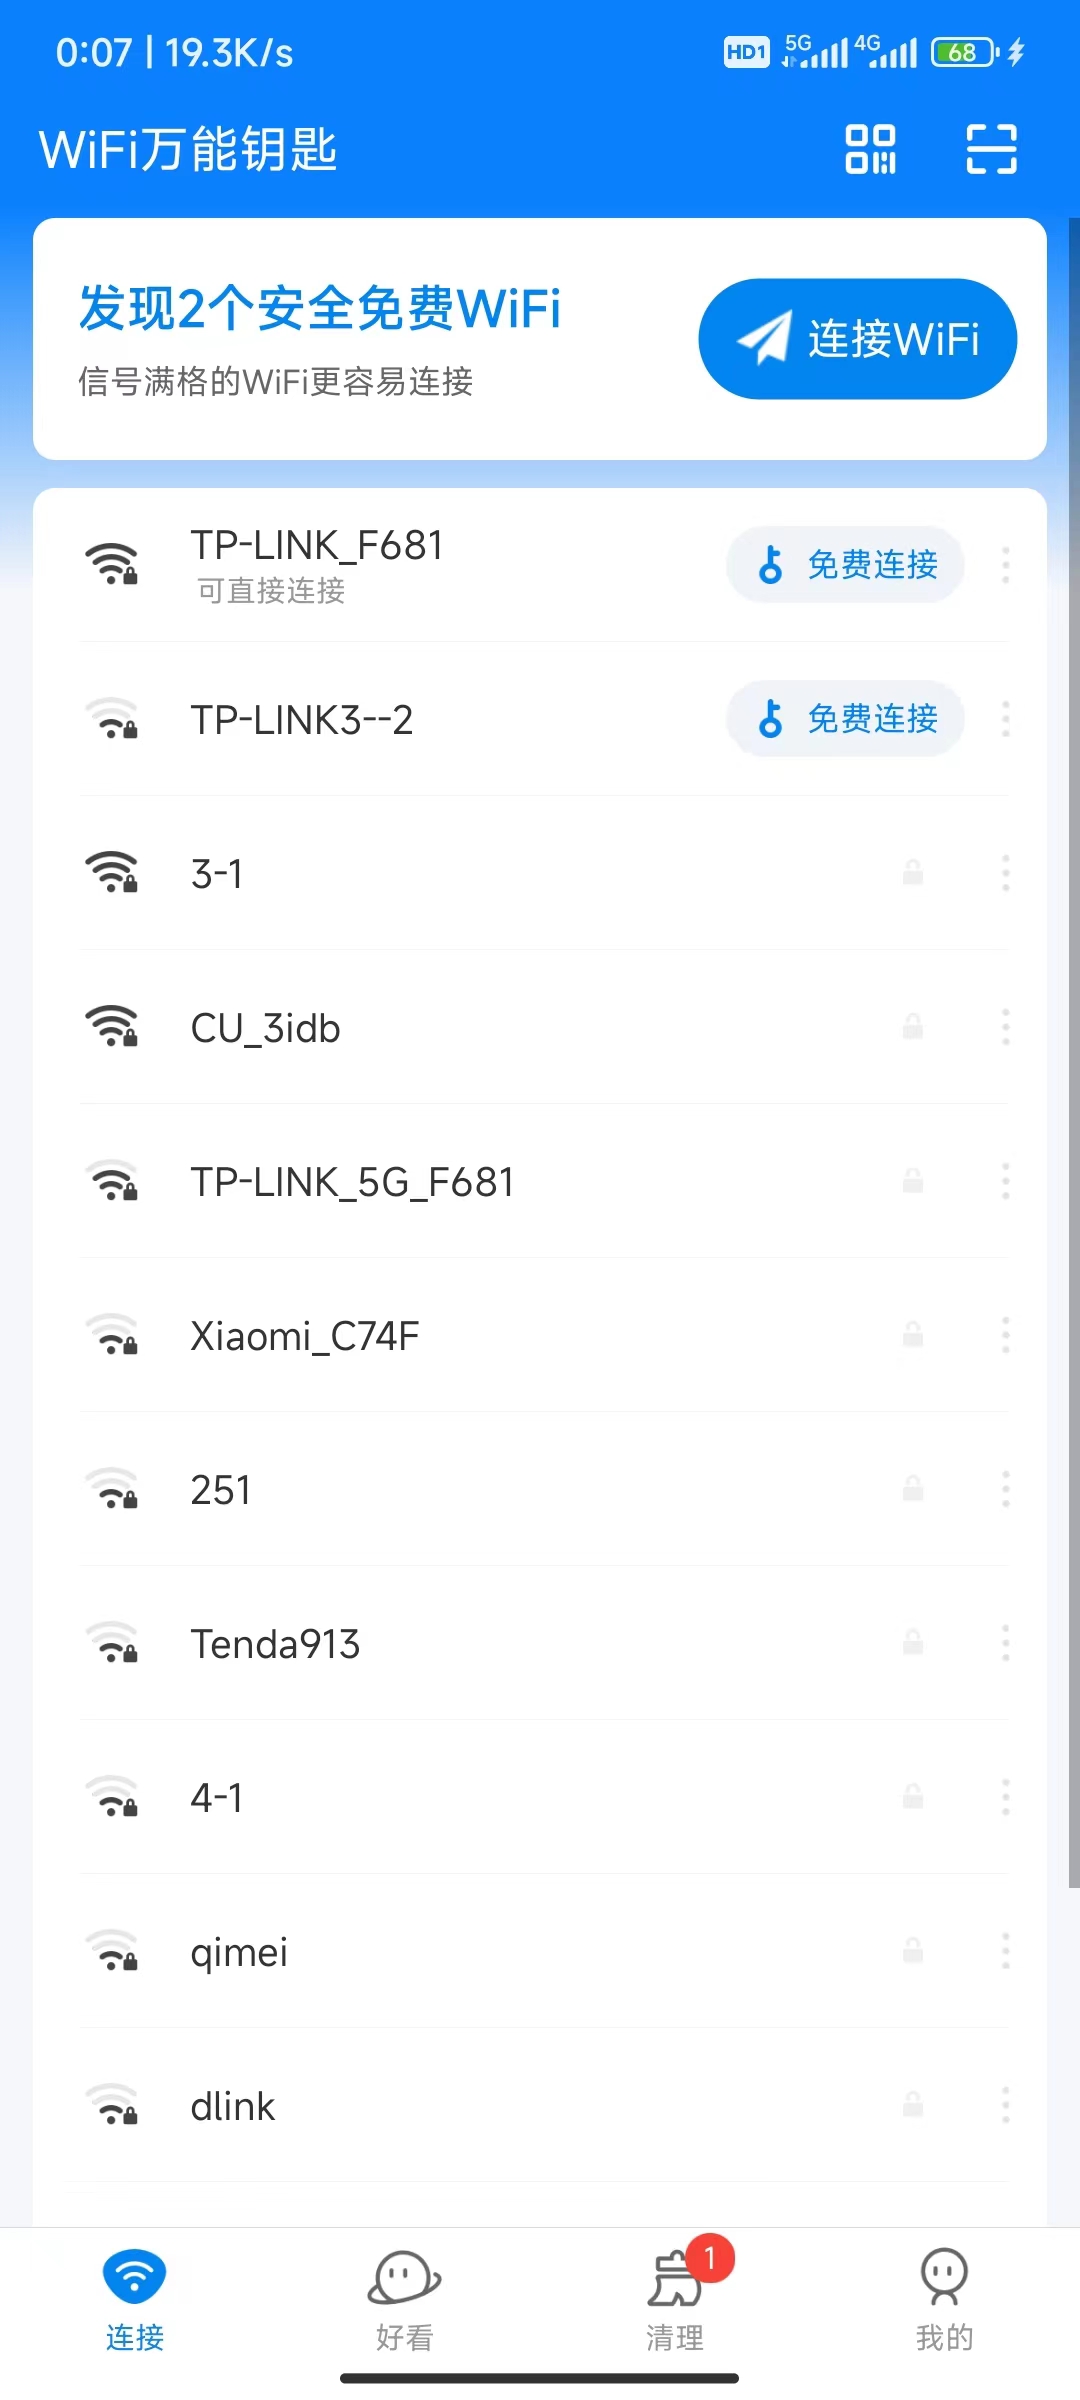 WiFi万能钥匙4.9.66解锁SVIP 屠城辅助网www.tcfz1.com45